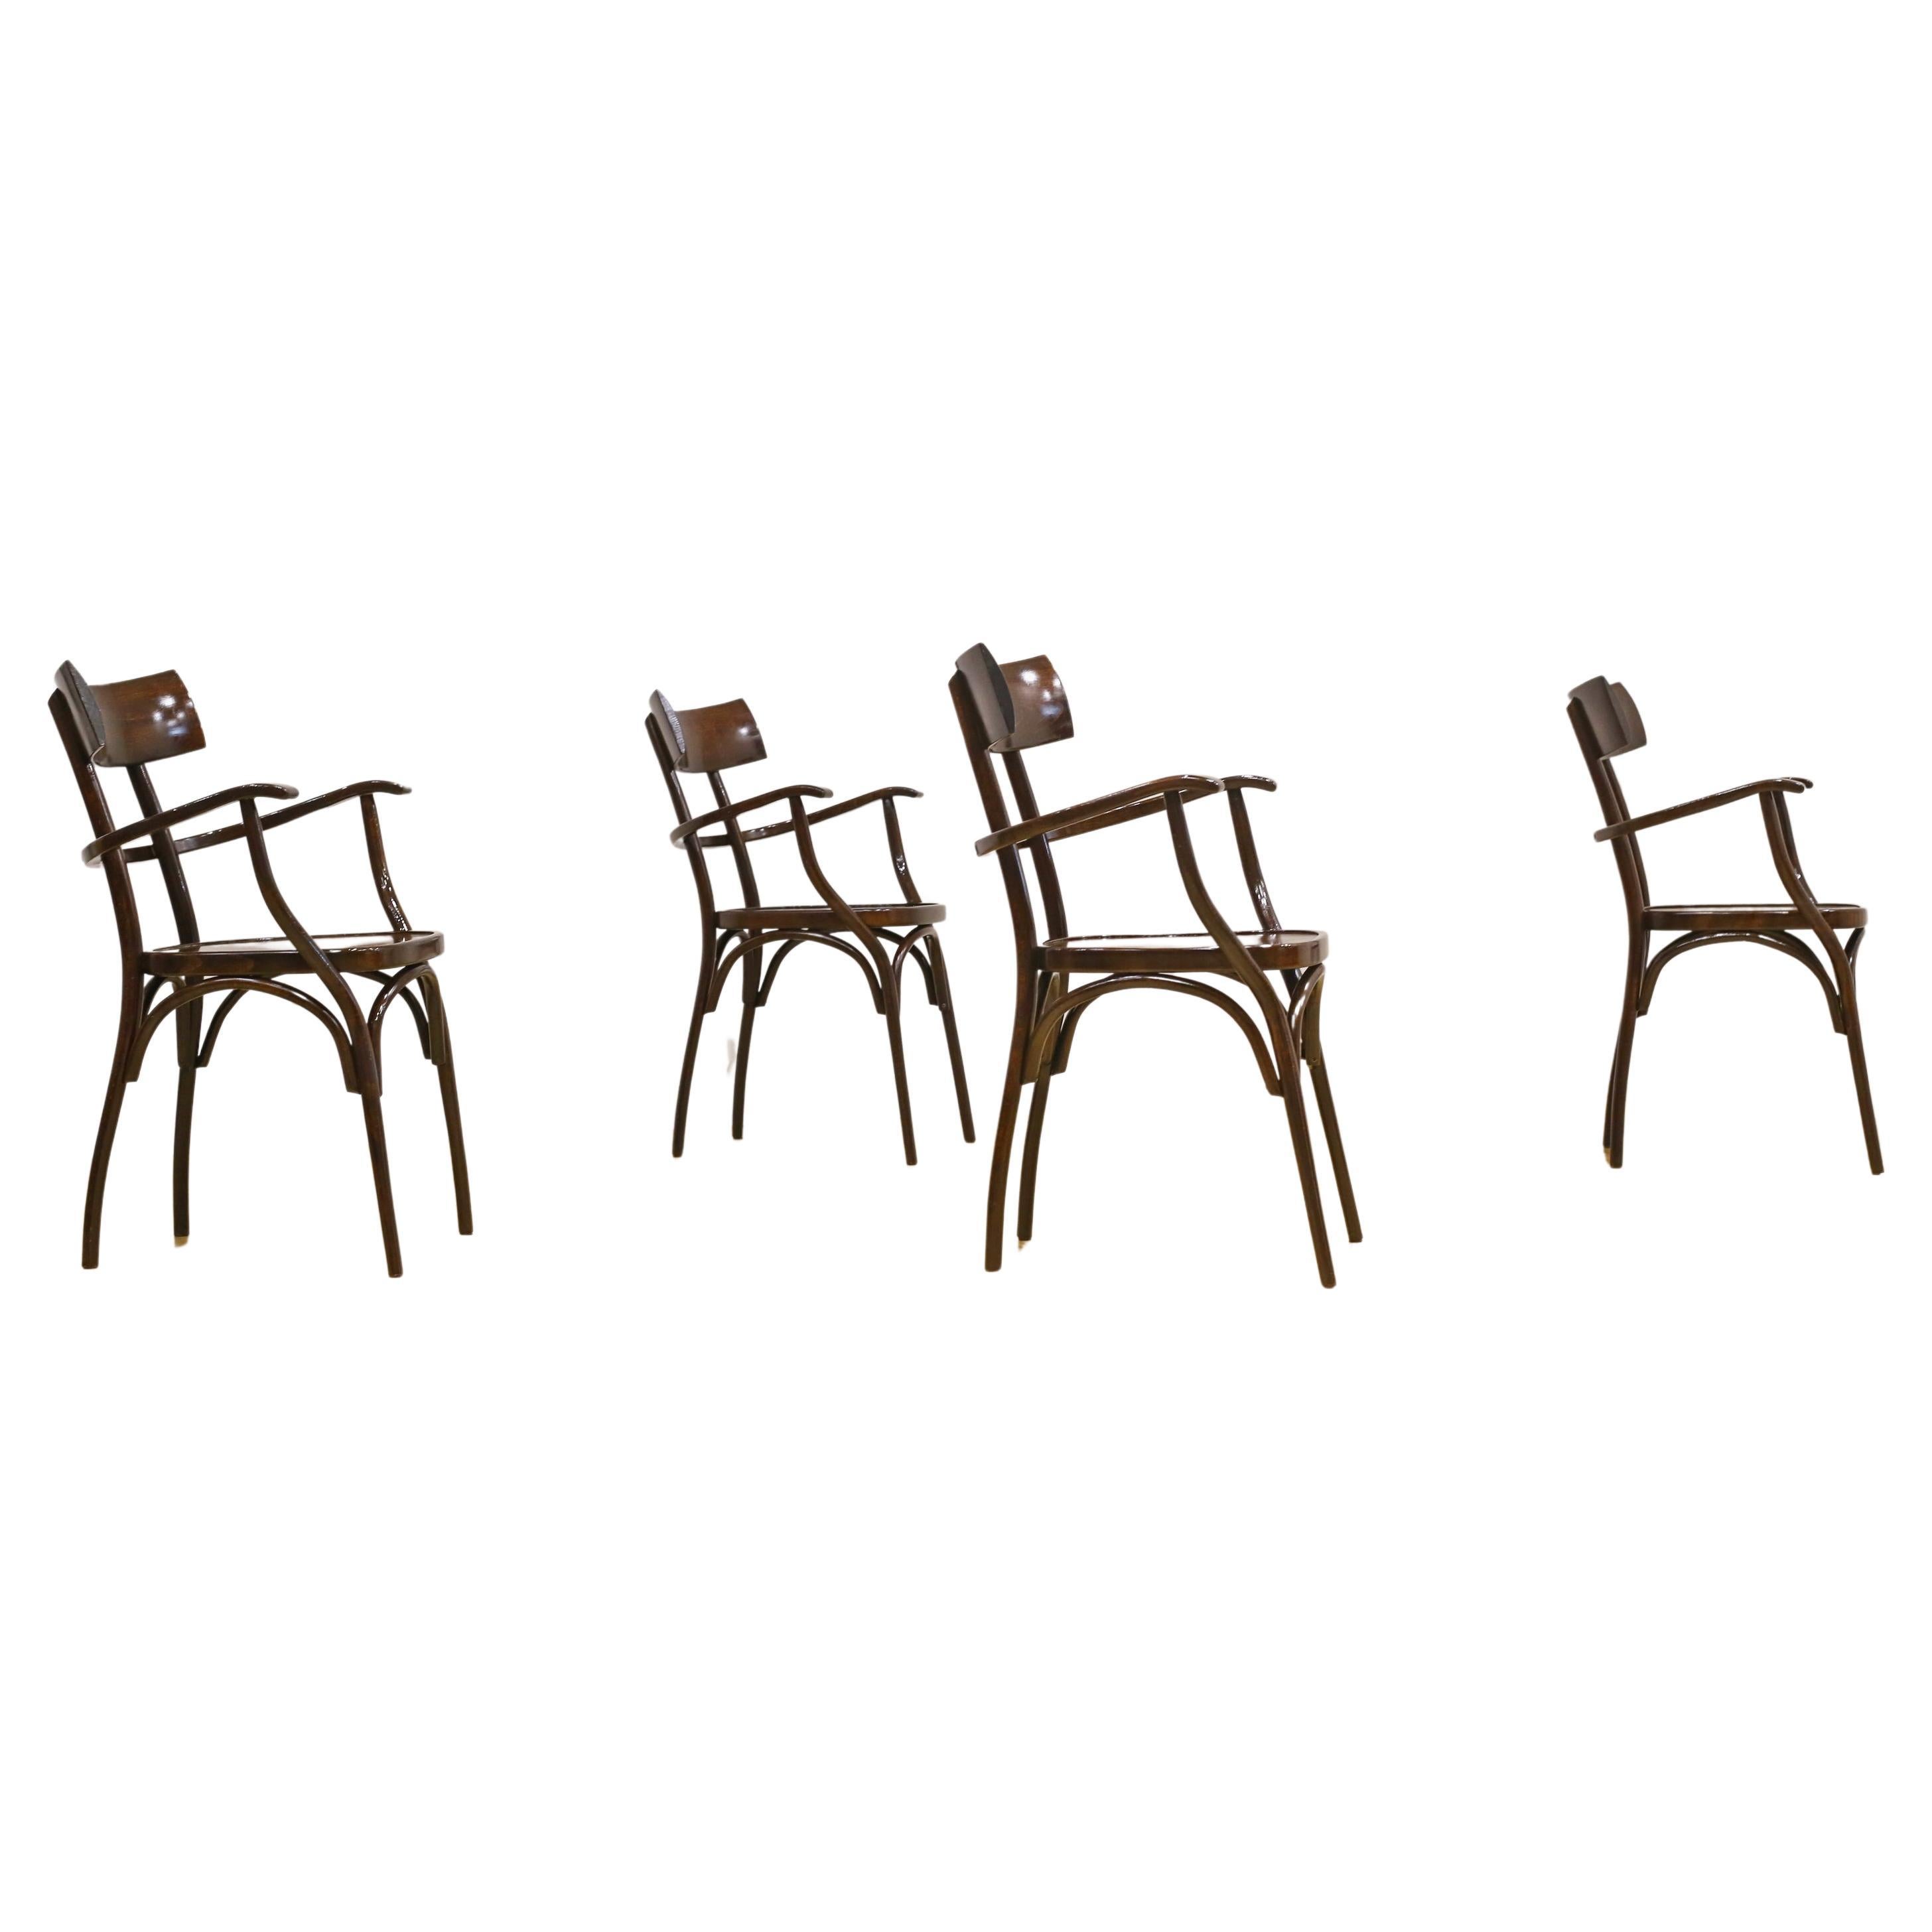 Vintage Hermann Black Chairs For Sale